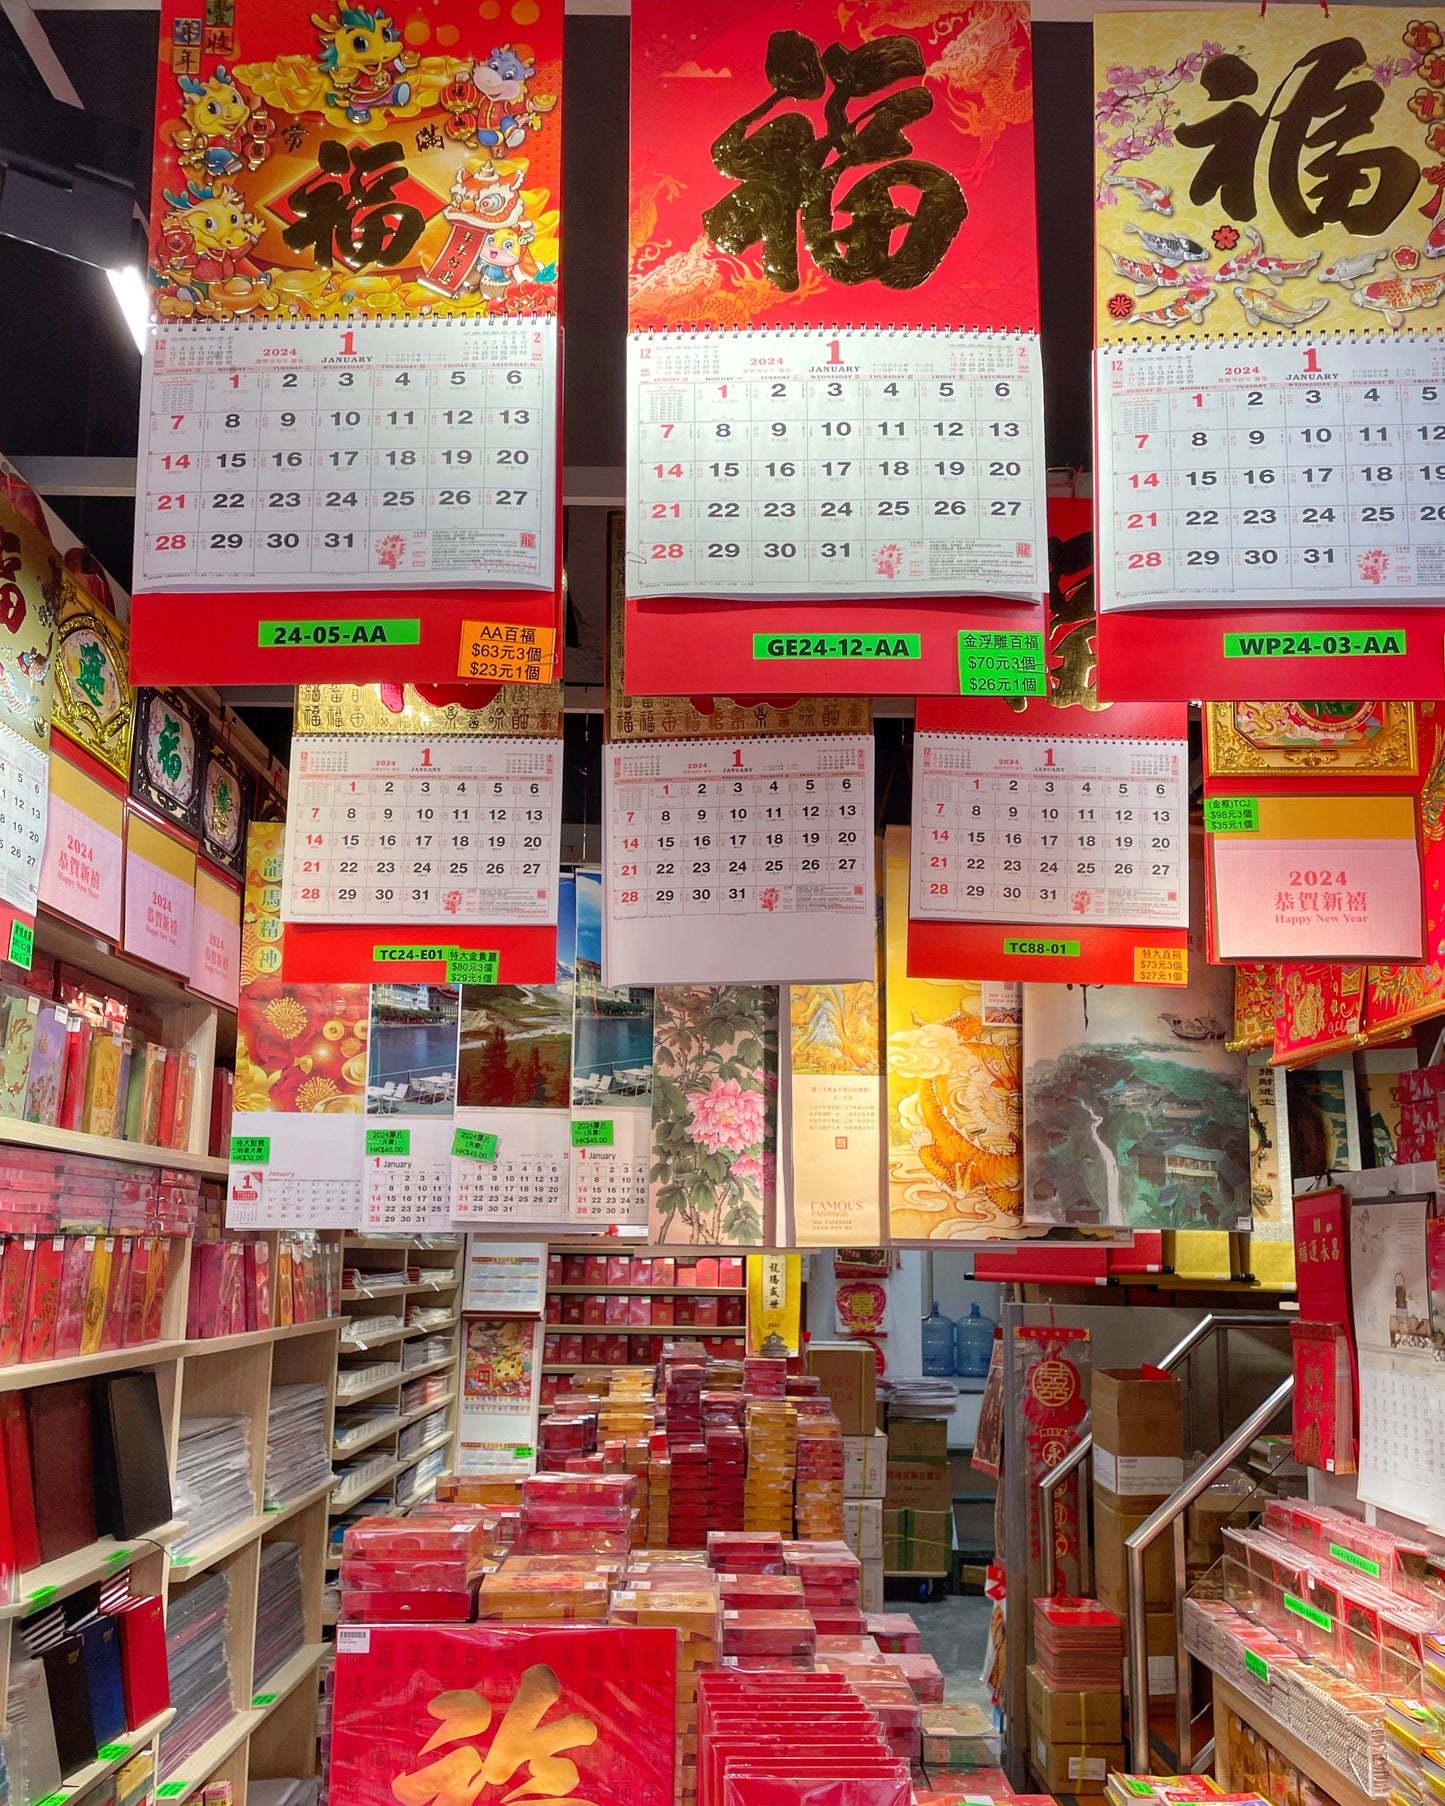 Explore Sham Shui Po Food Tour (Lunar New Year Edition)